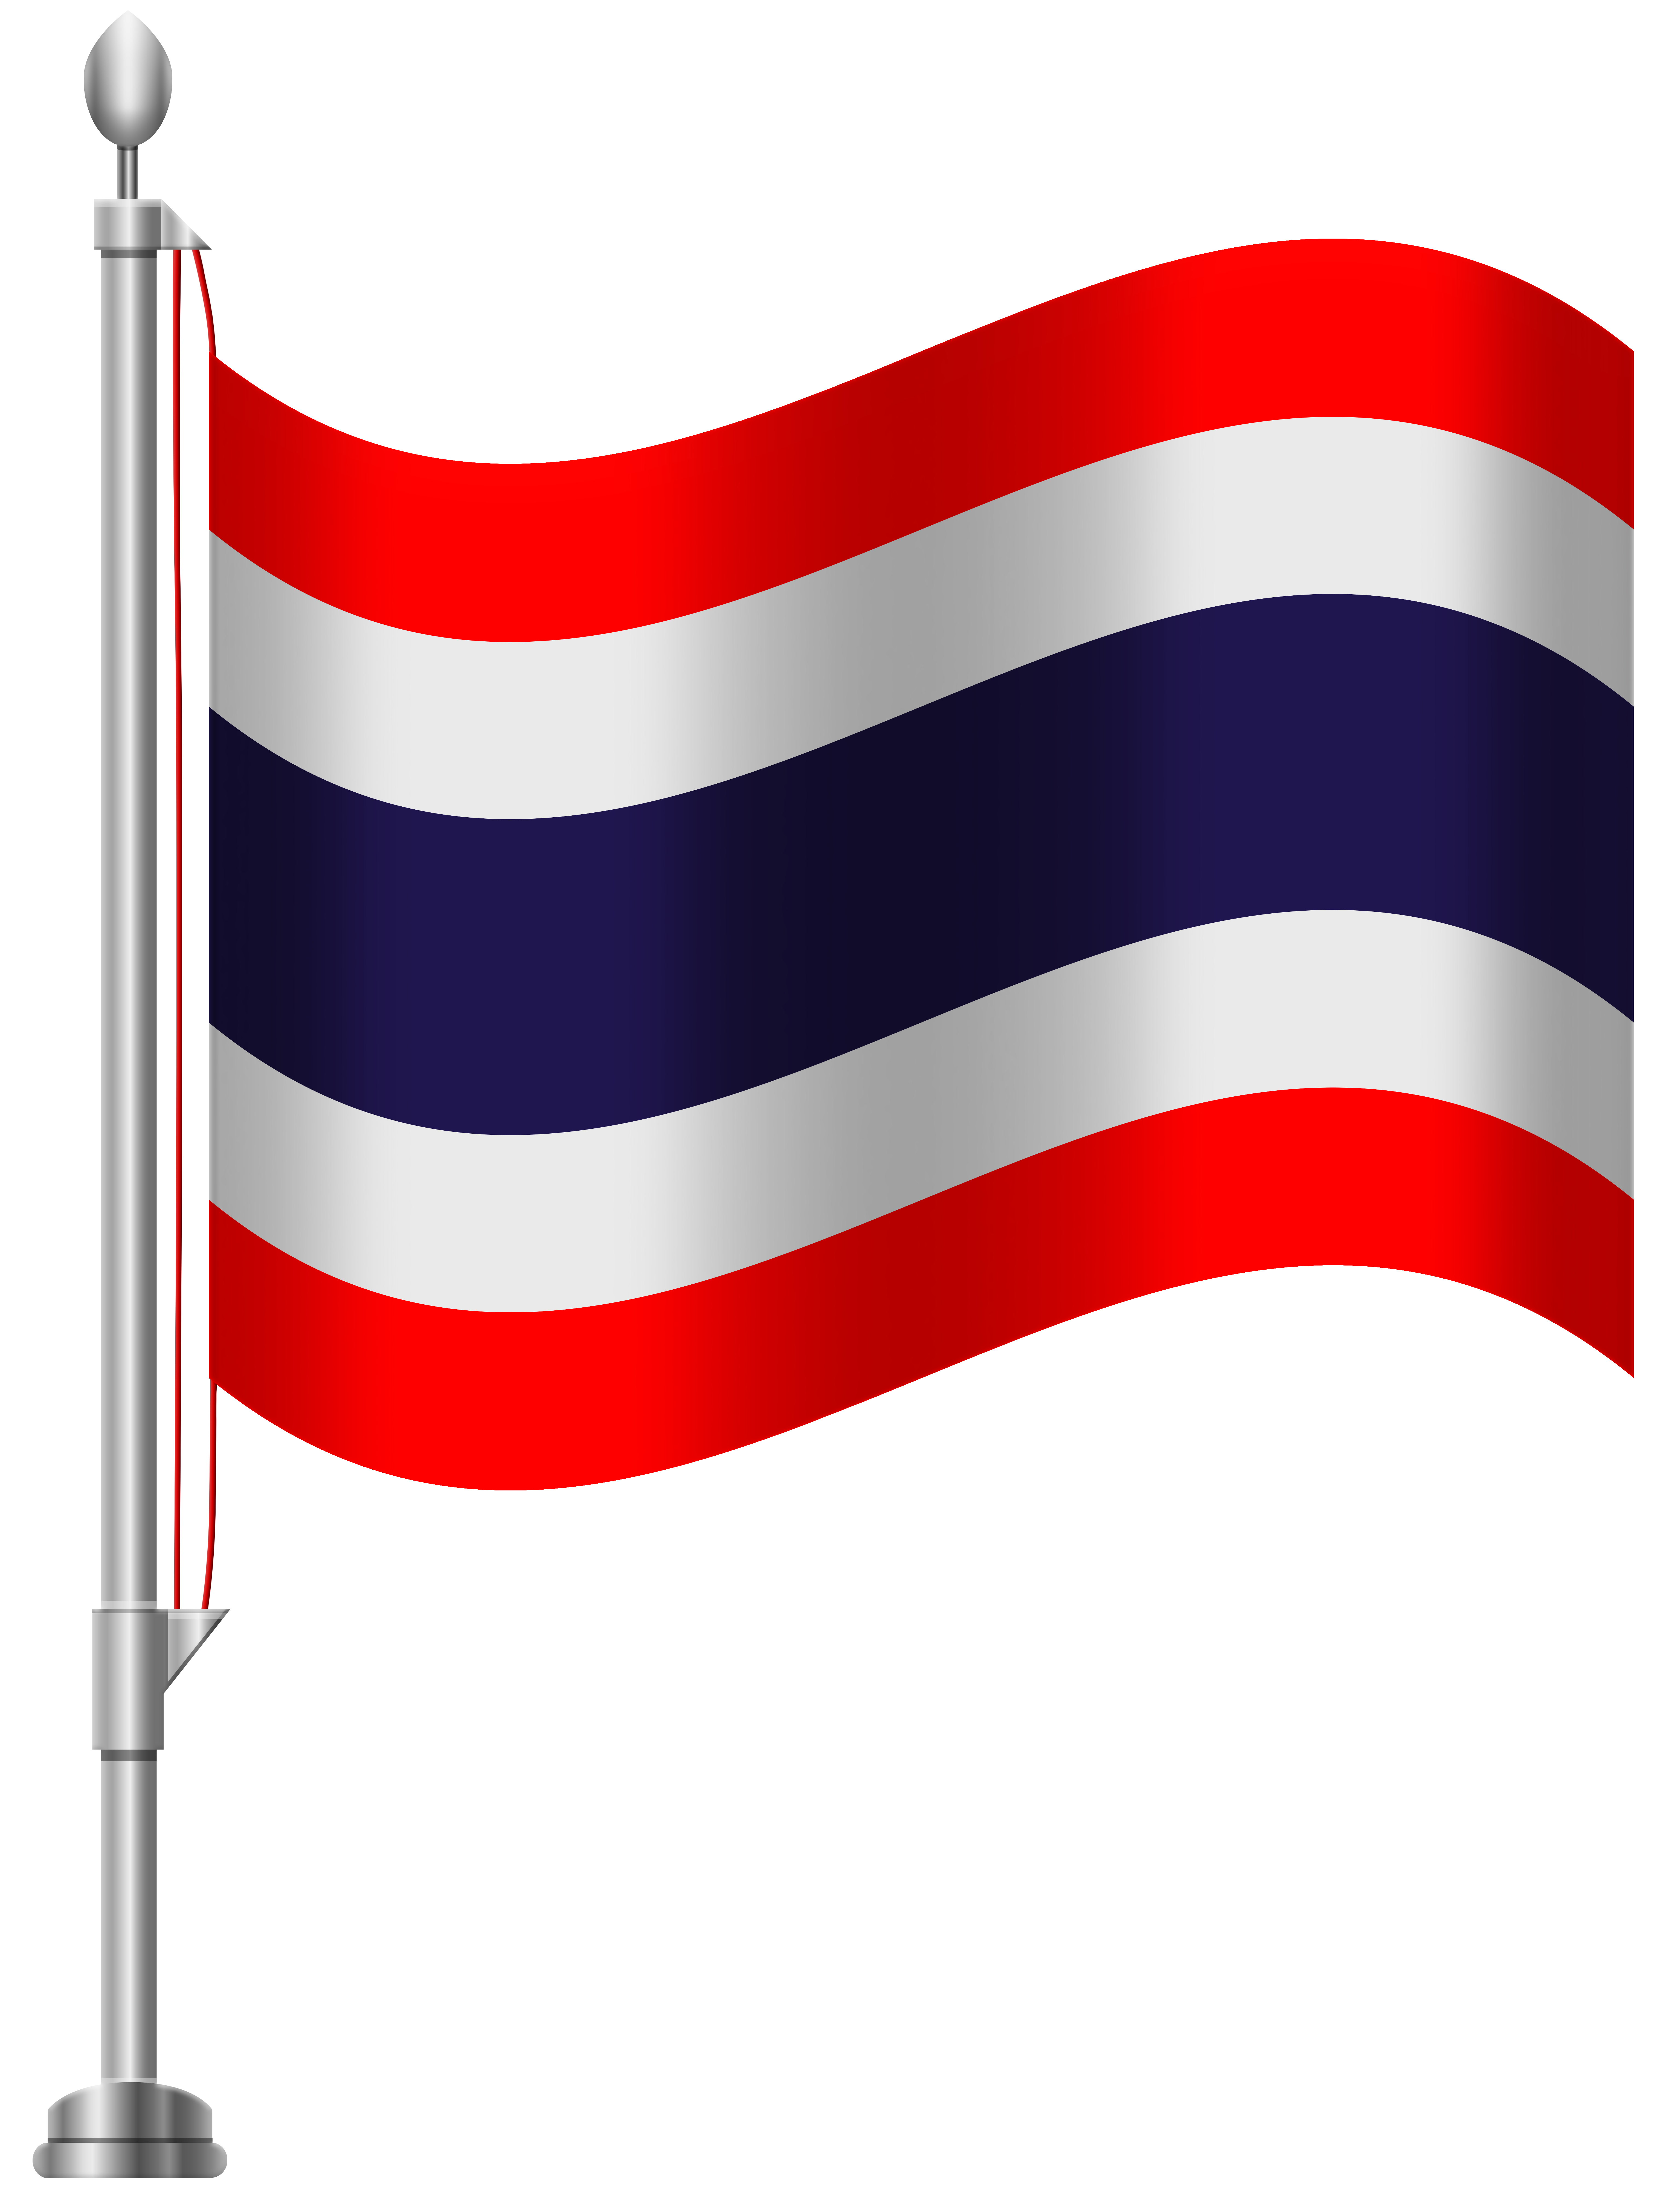 عکس پرچم تایلند